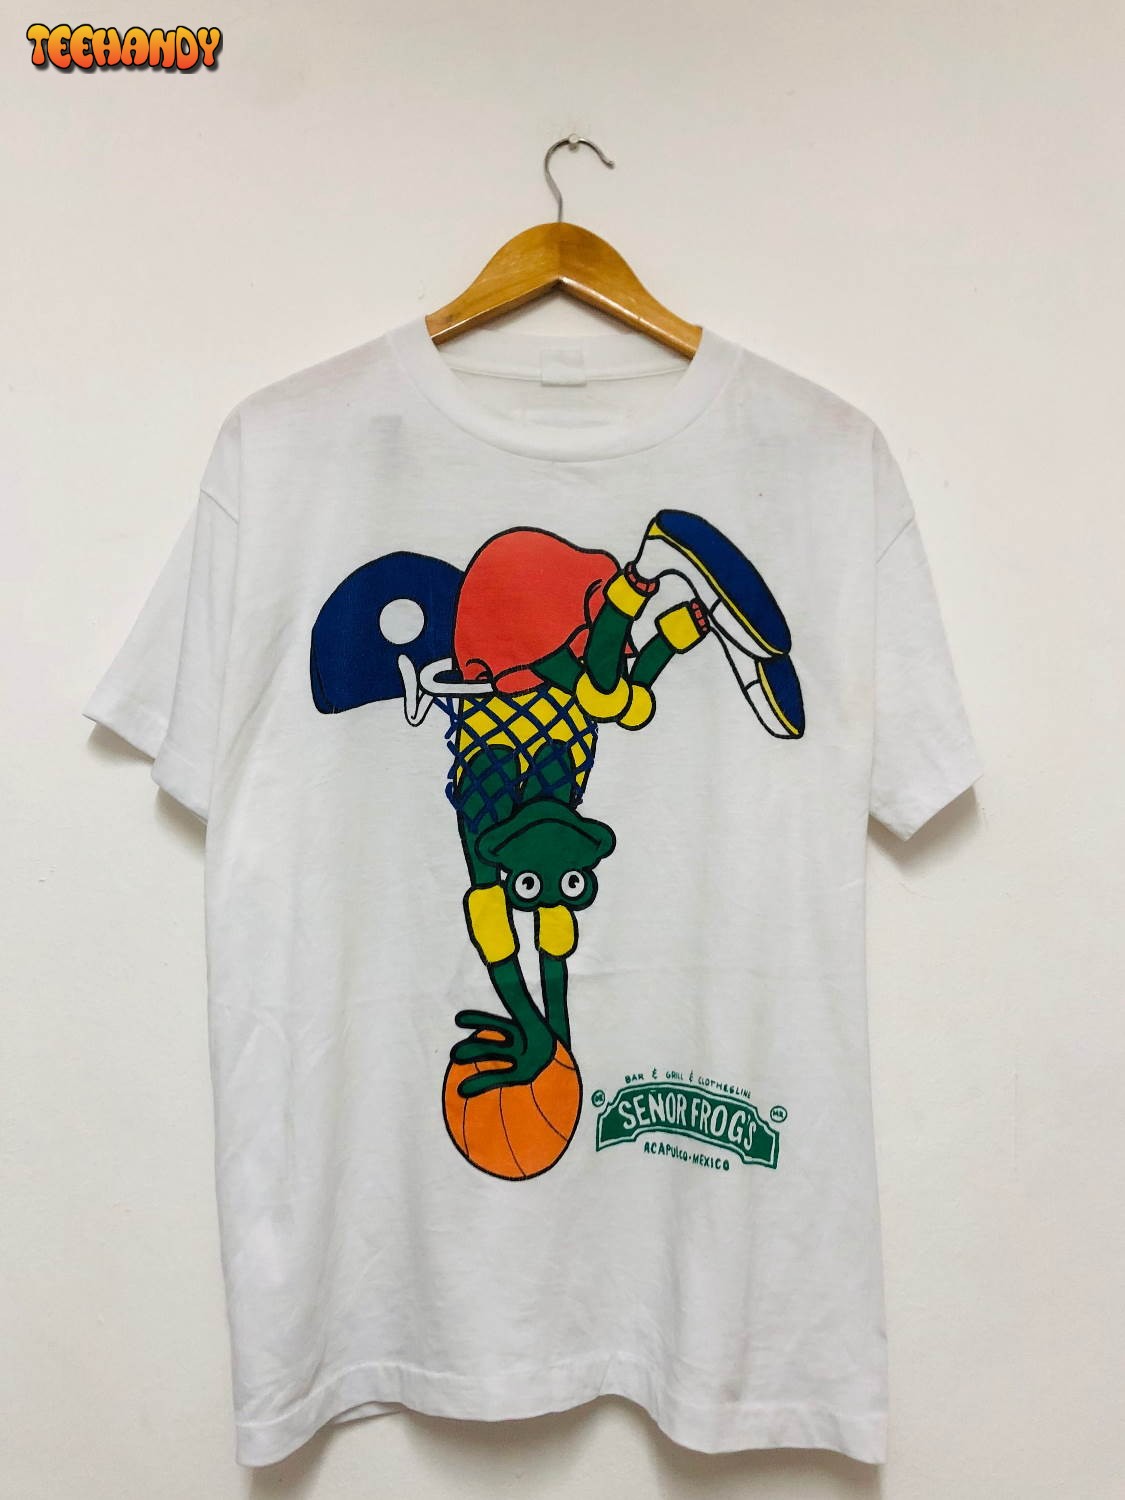 Vintage Original 90s Senor Frog’s T-Shirt